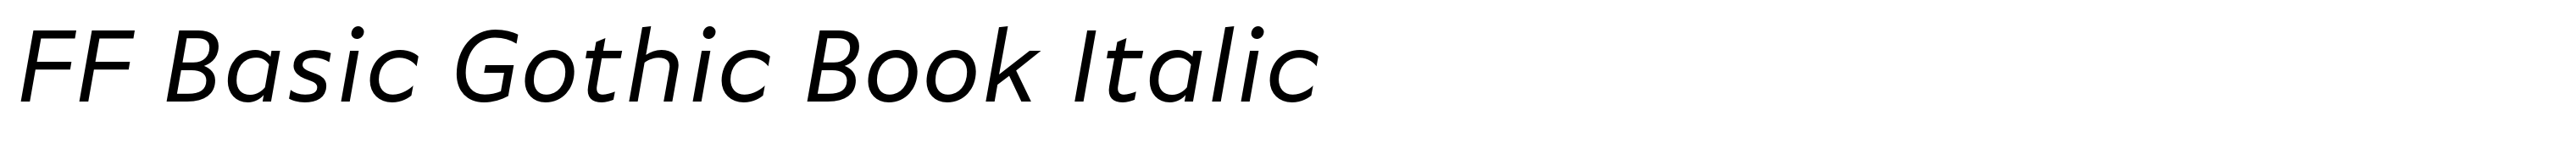 FF Basic Gothic Book Italic